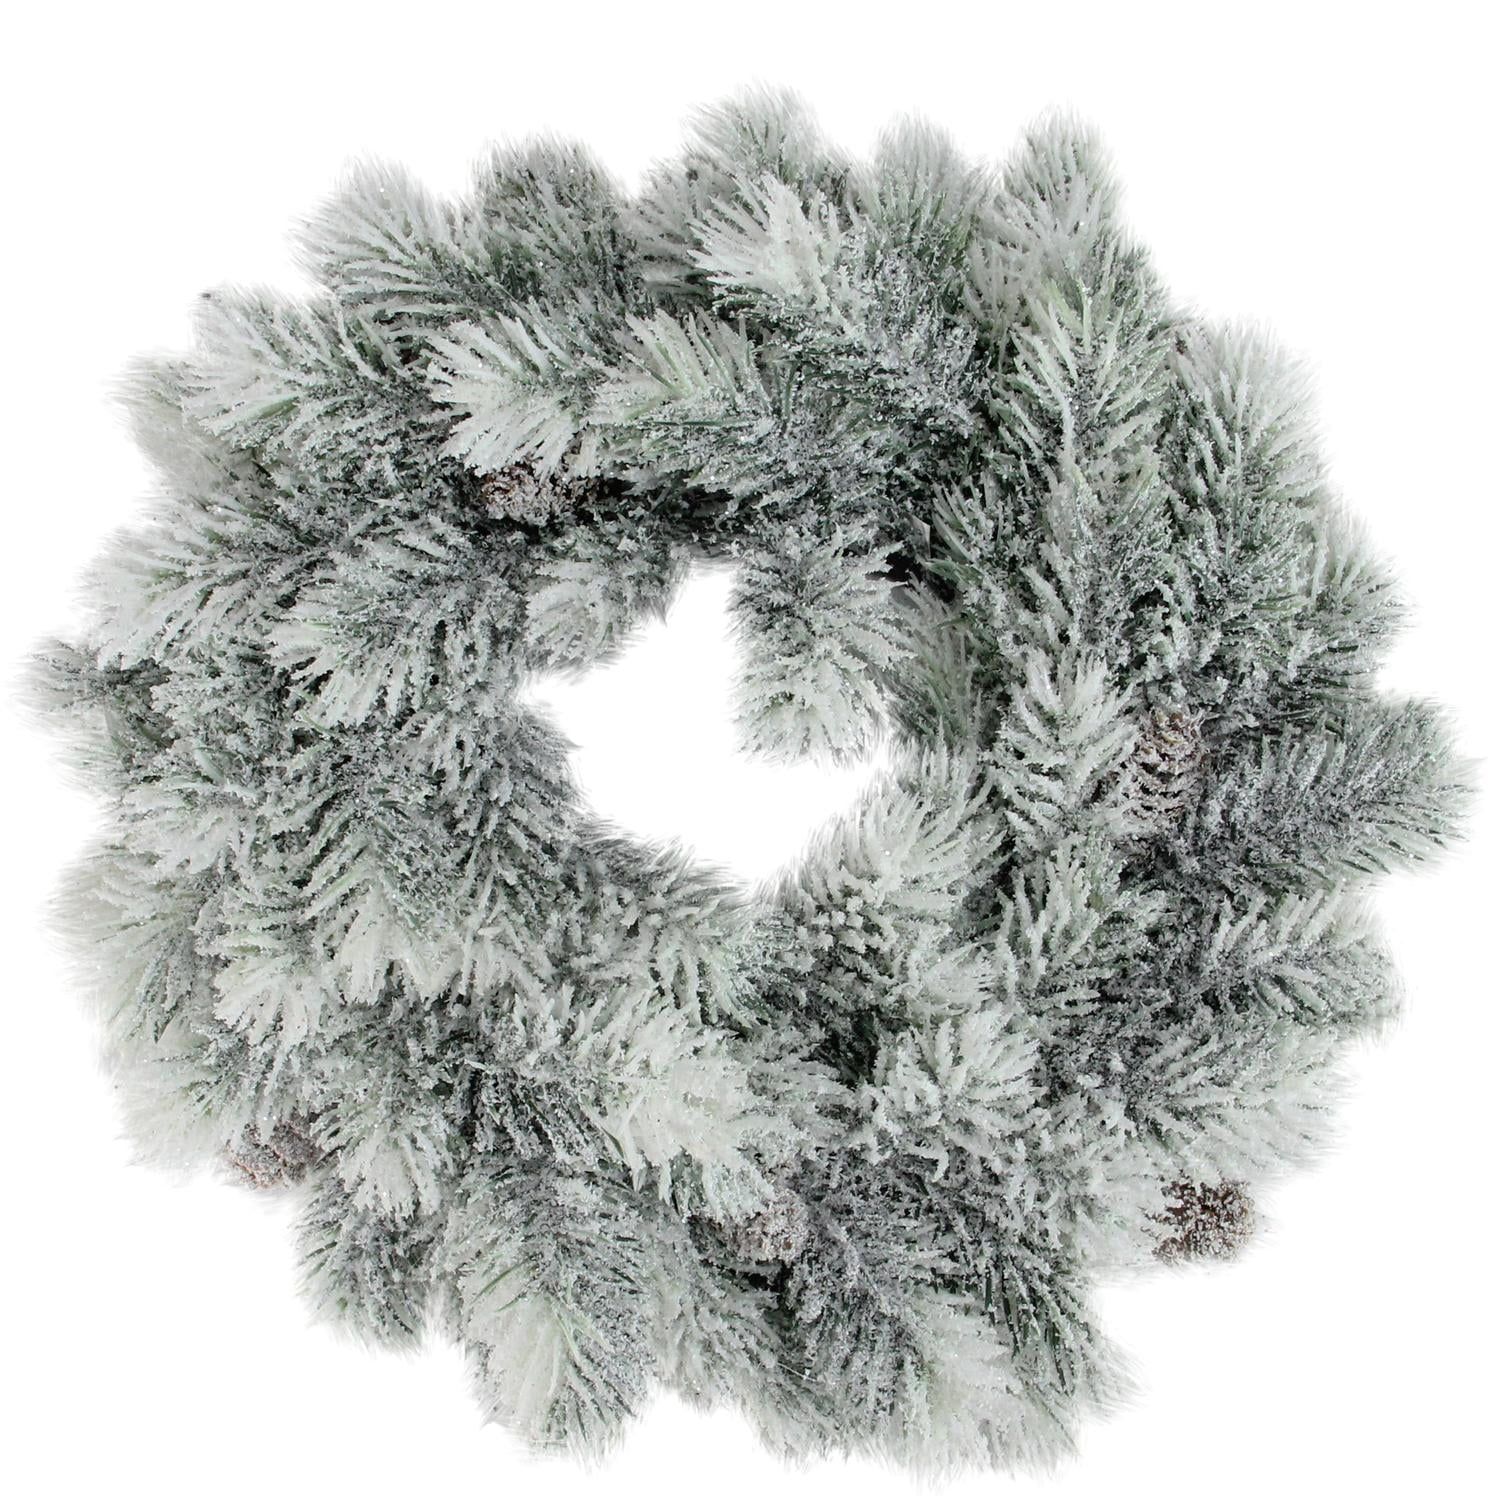 12" Flocked Green Pine Decorative Christmas Wreath with Pine Cones | Walmart (US)